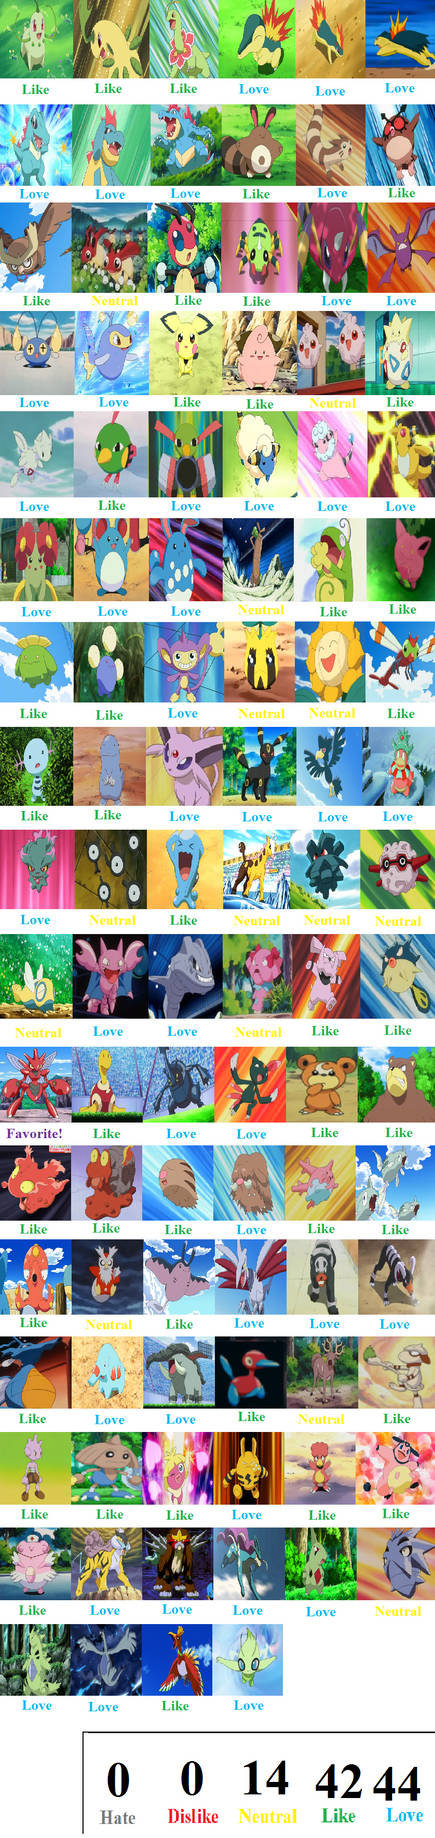 Alola Pokemon Tier List by mlp-vs-capcom on DeviantArt